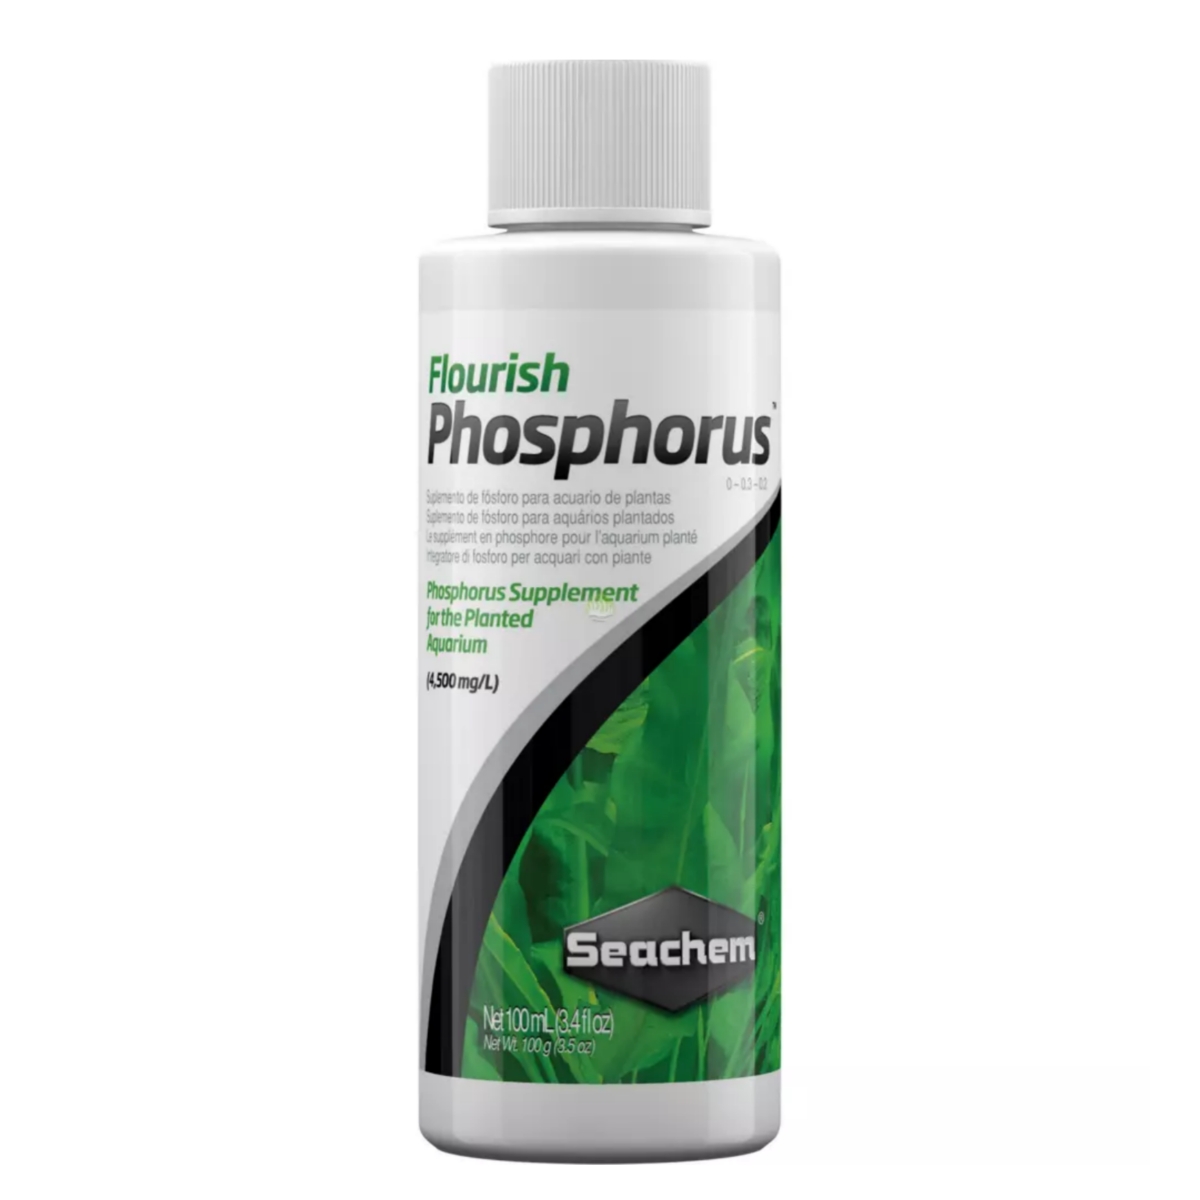 کود فسفر گیاهان آکواریوم سیچم مدل Flourish phosphorus حجم 100 میلی لیتر